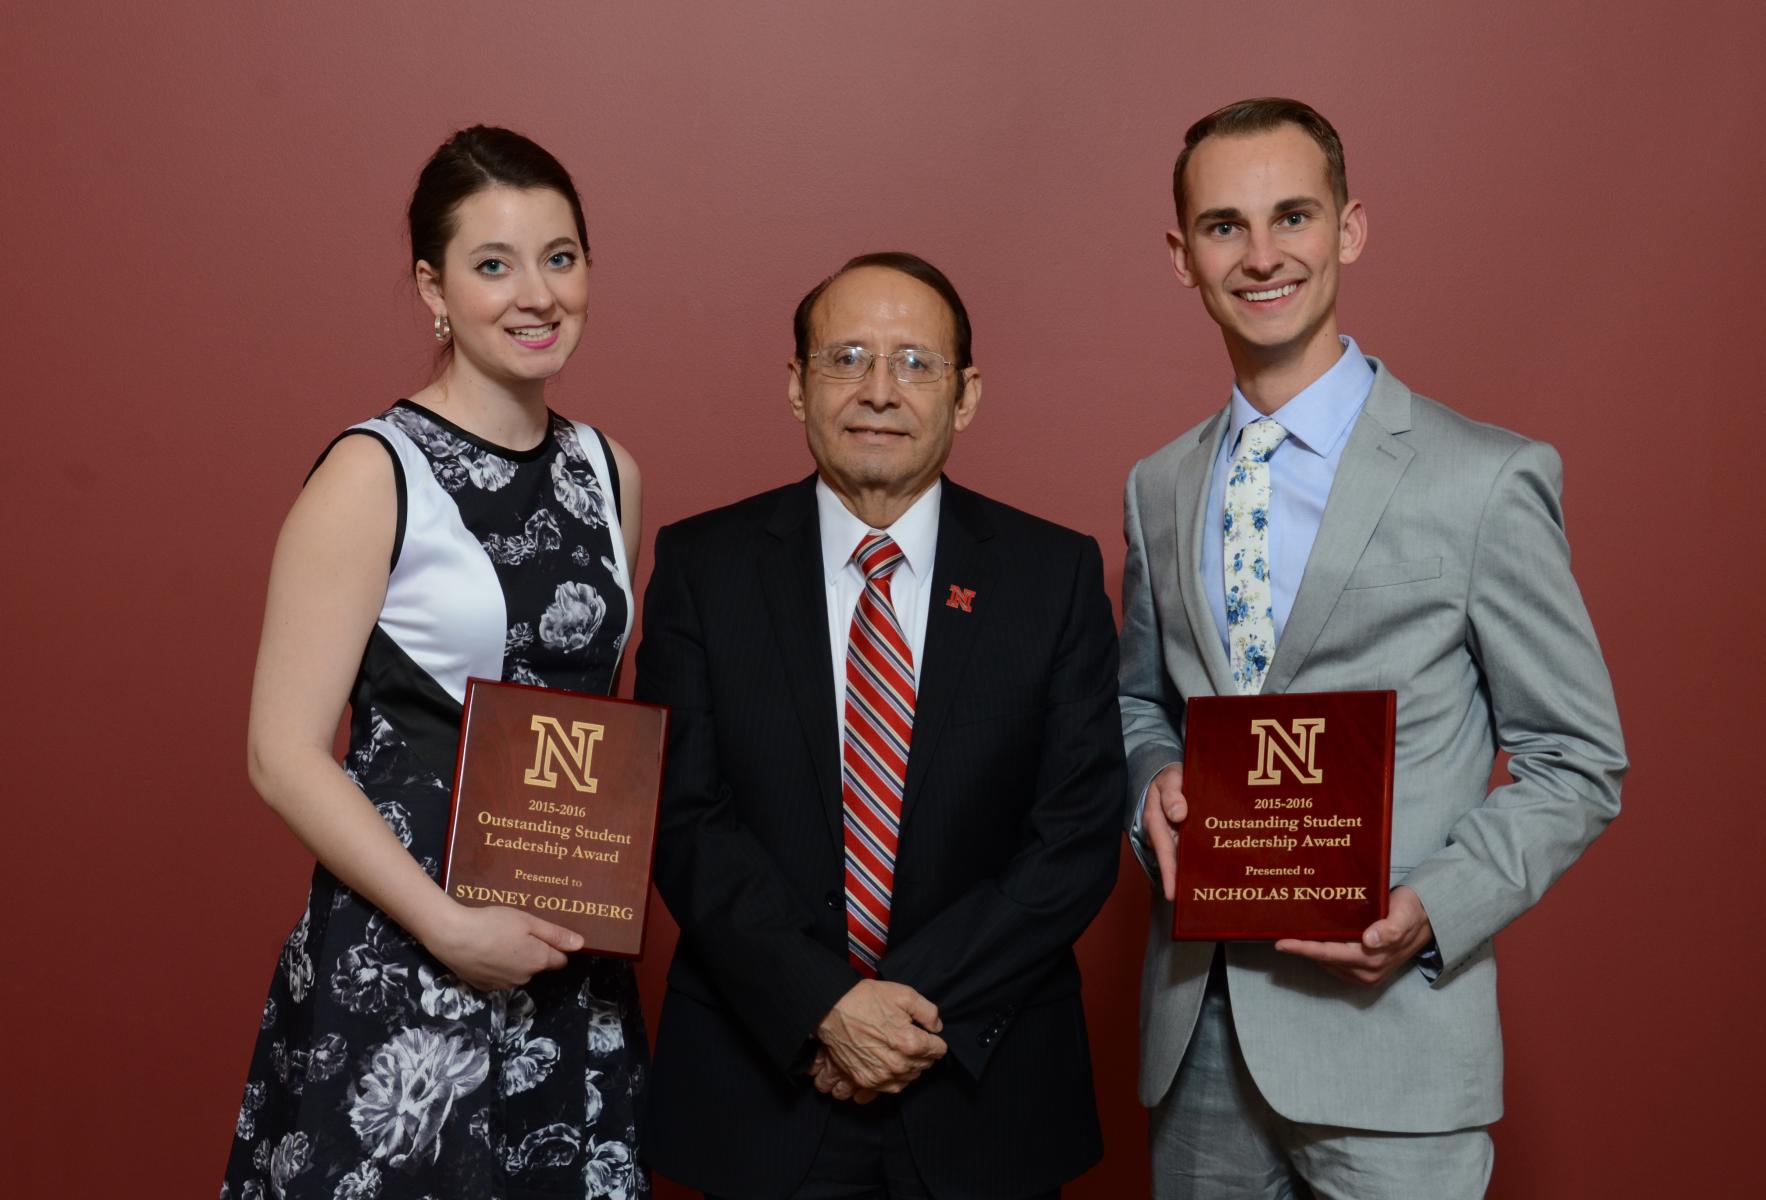 2016 Outstanding Student Leadership Award recipients Sydney Goldberg and Nicholas Knopik with Dr. Juan Franco